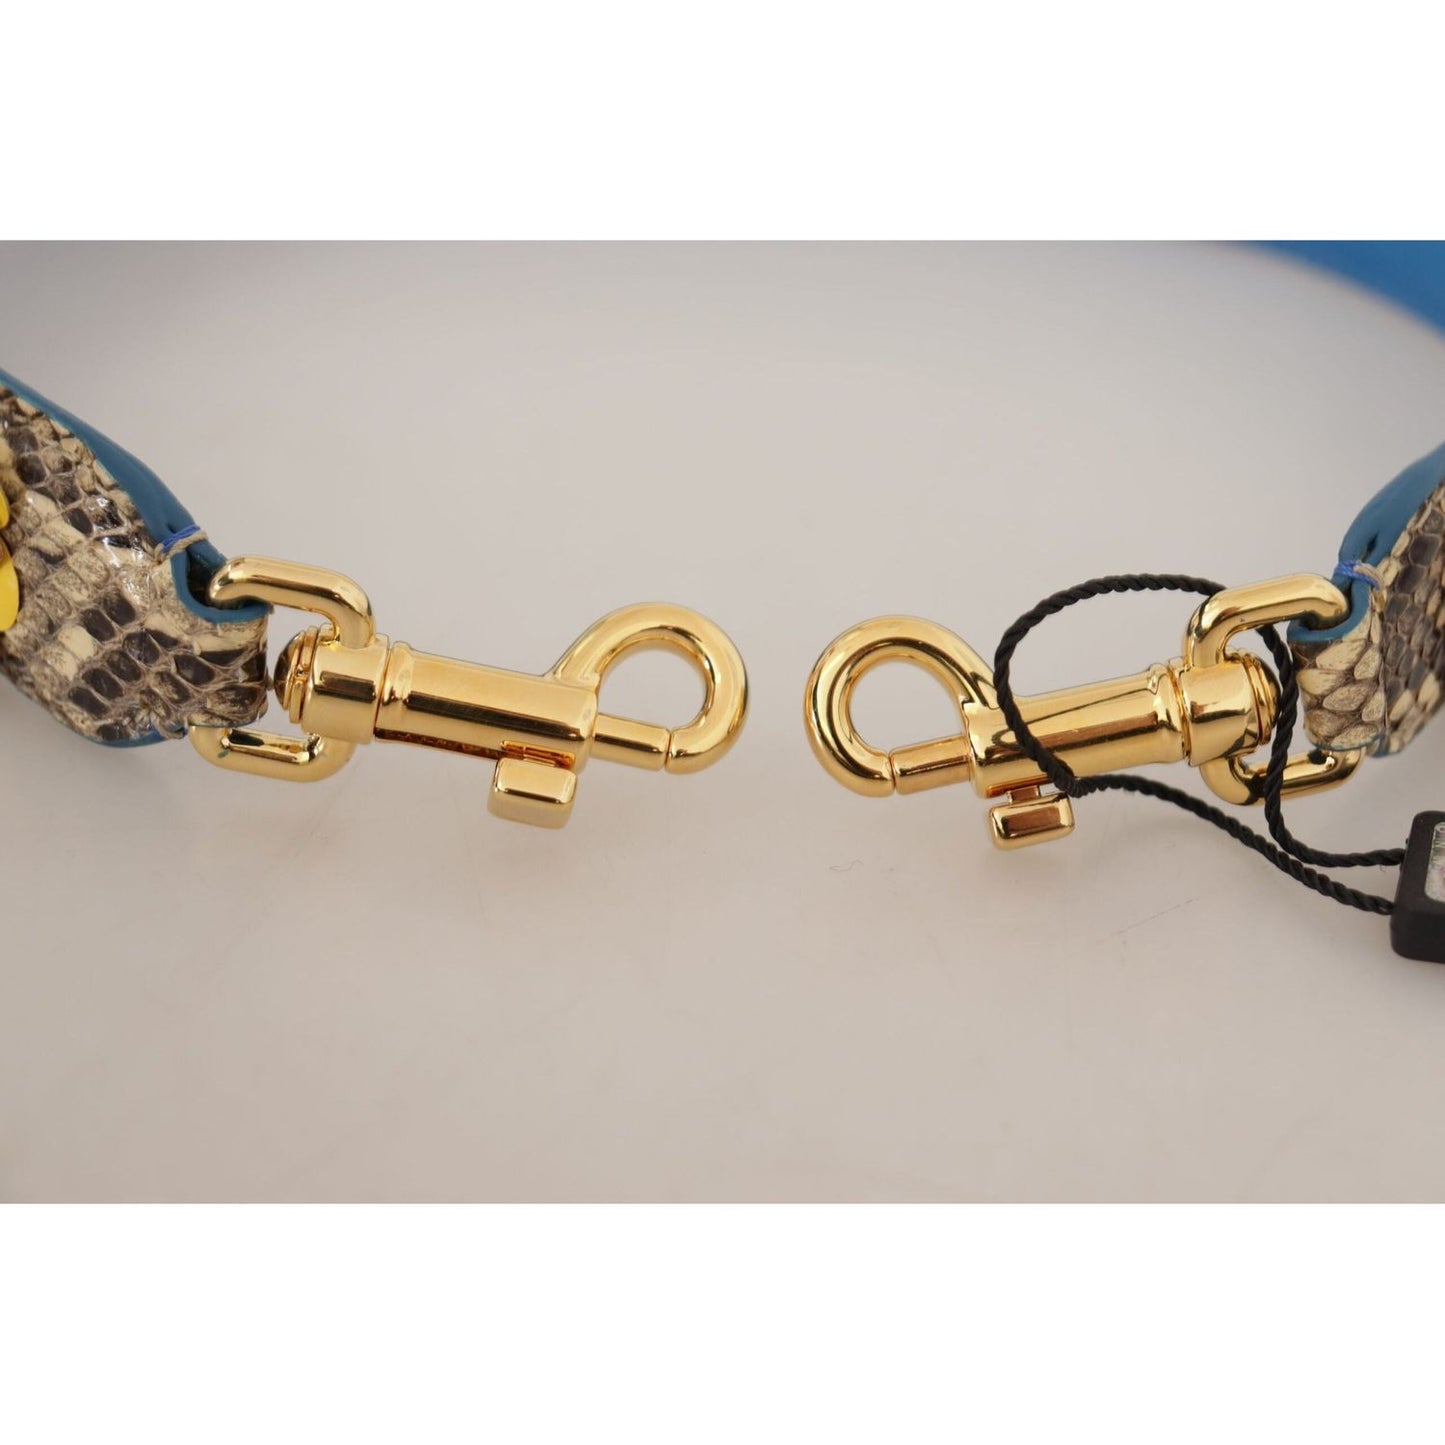 Dolce & Gabbana Elegant Beige Python Leather Shoulder Strap beige-python-leather-floral-studded-shoulder-strap-1